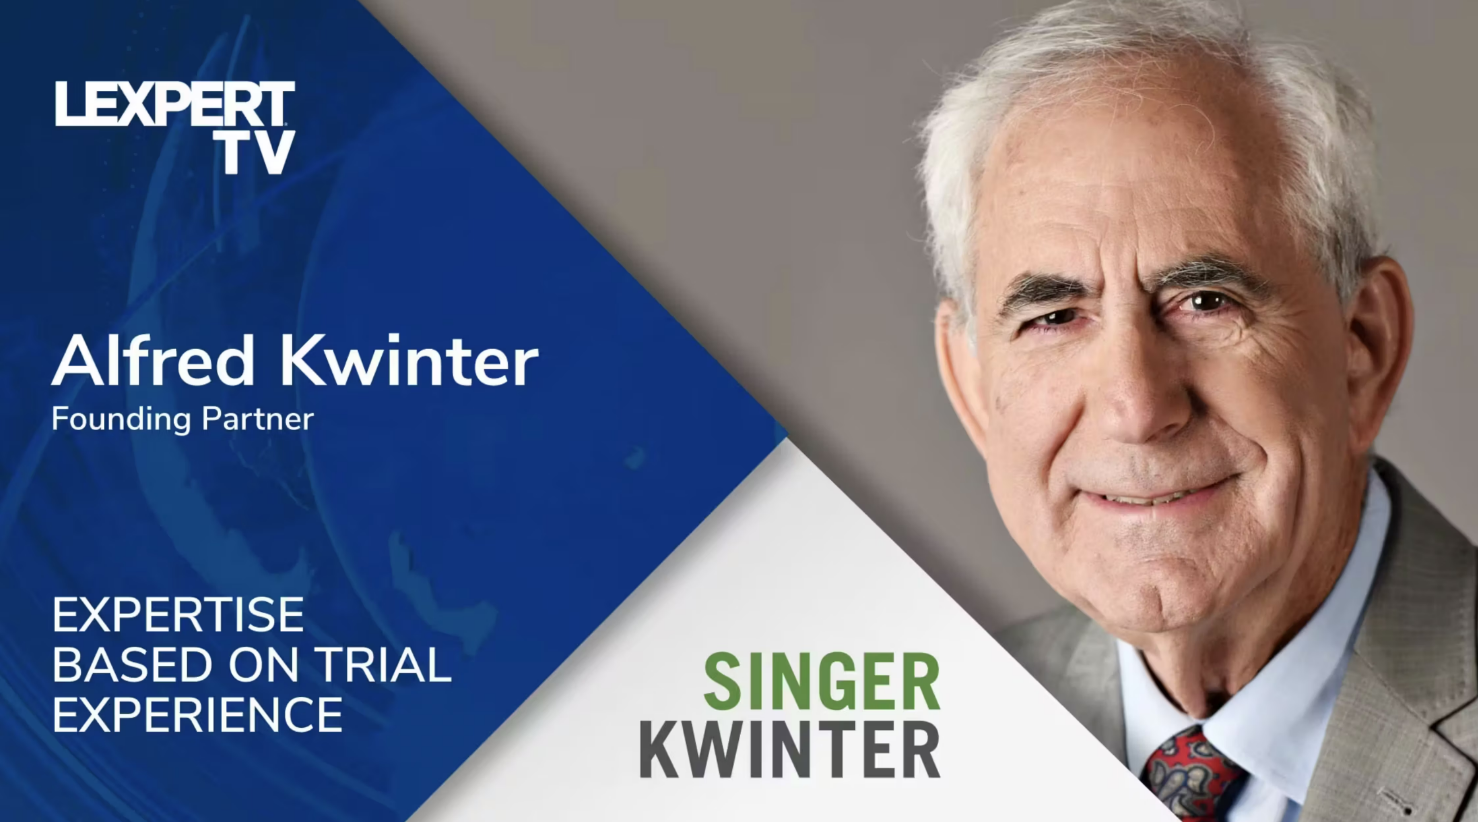 Alfred Kwinter of Singer Kwinter on the value of expertise